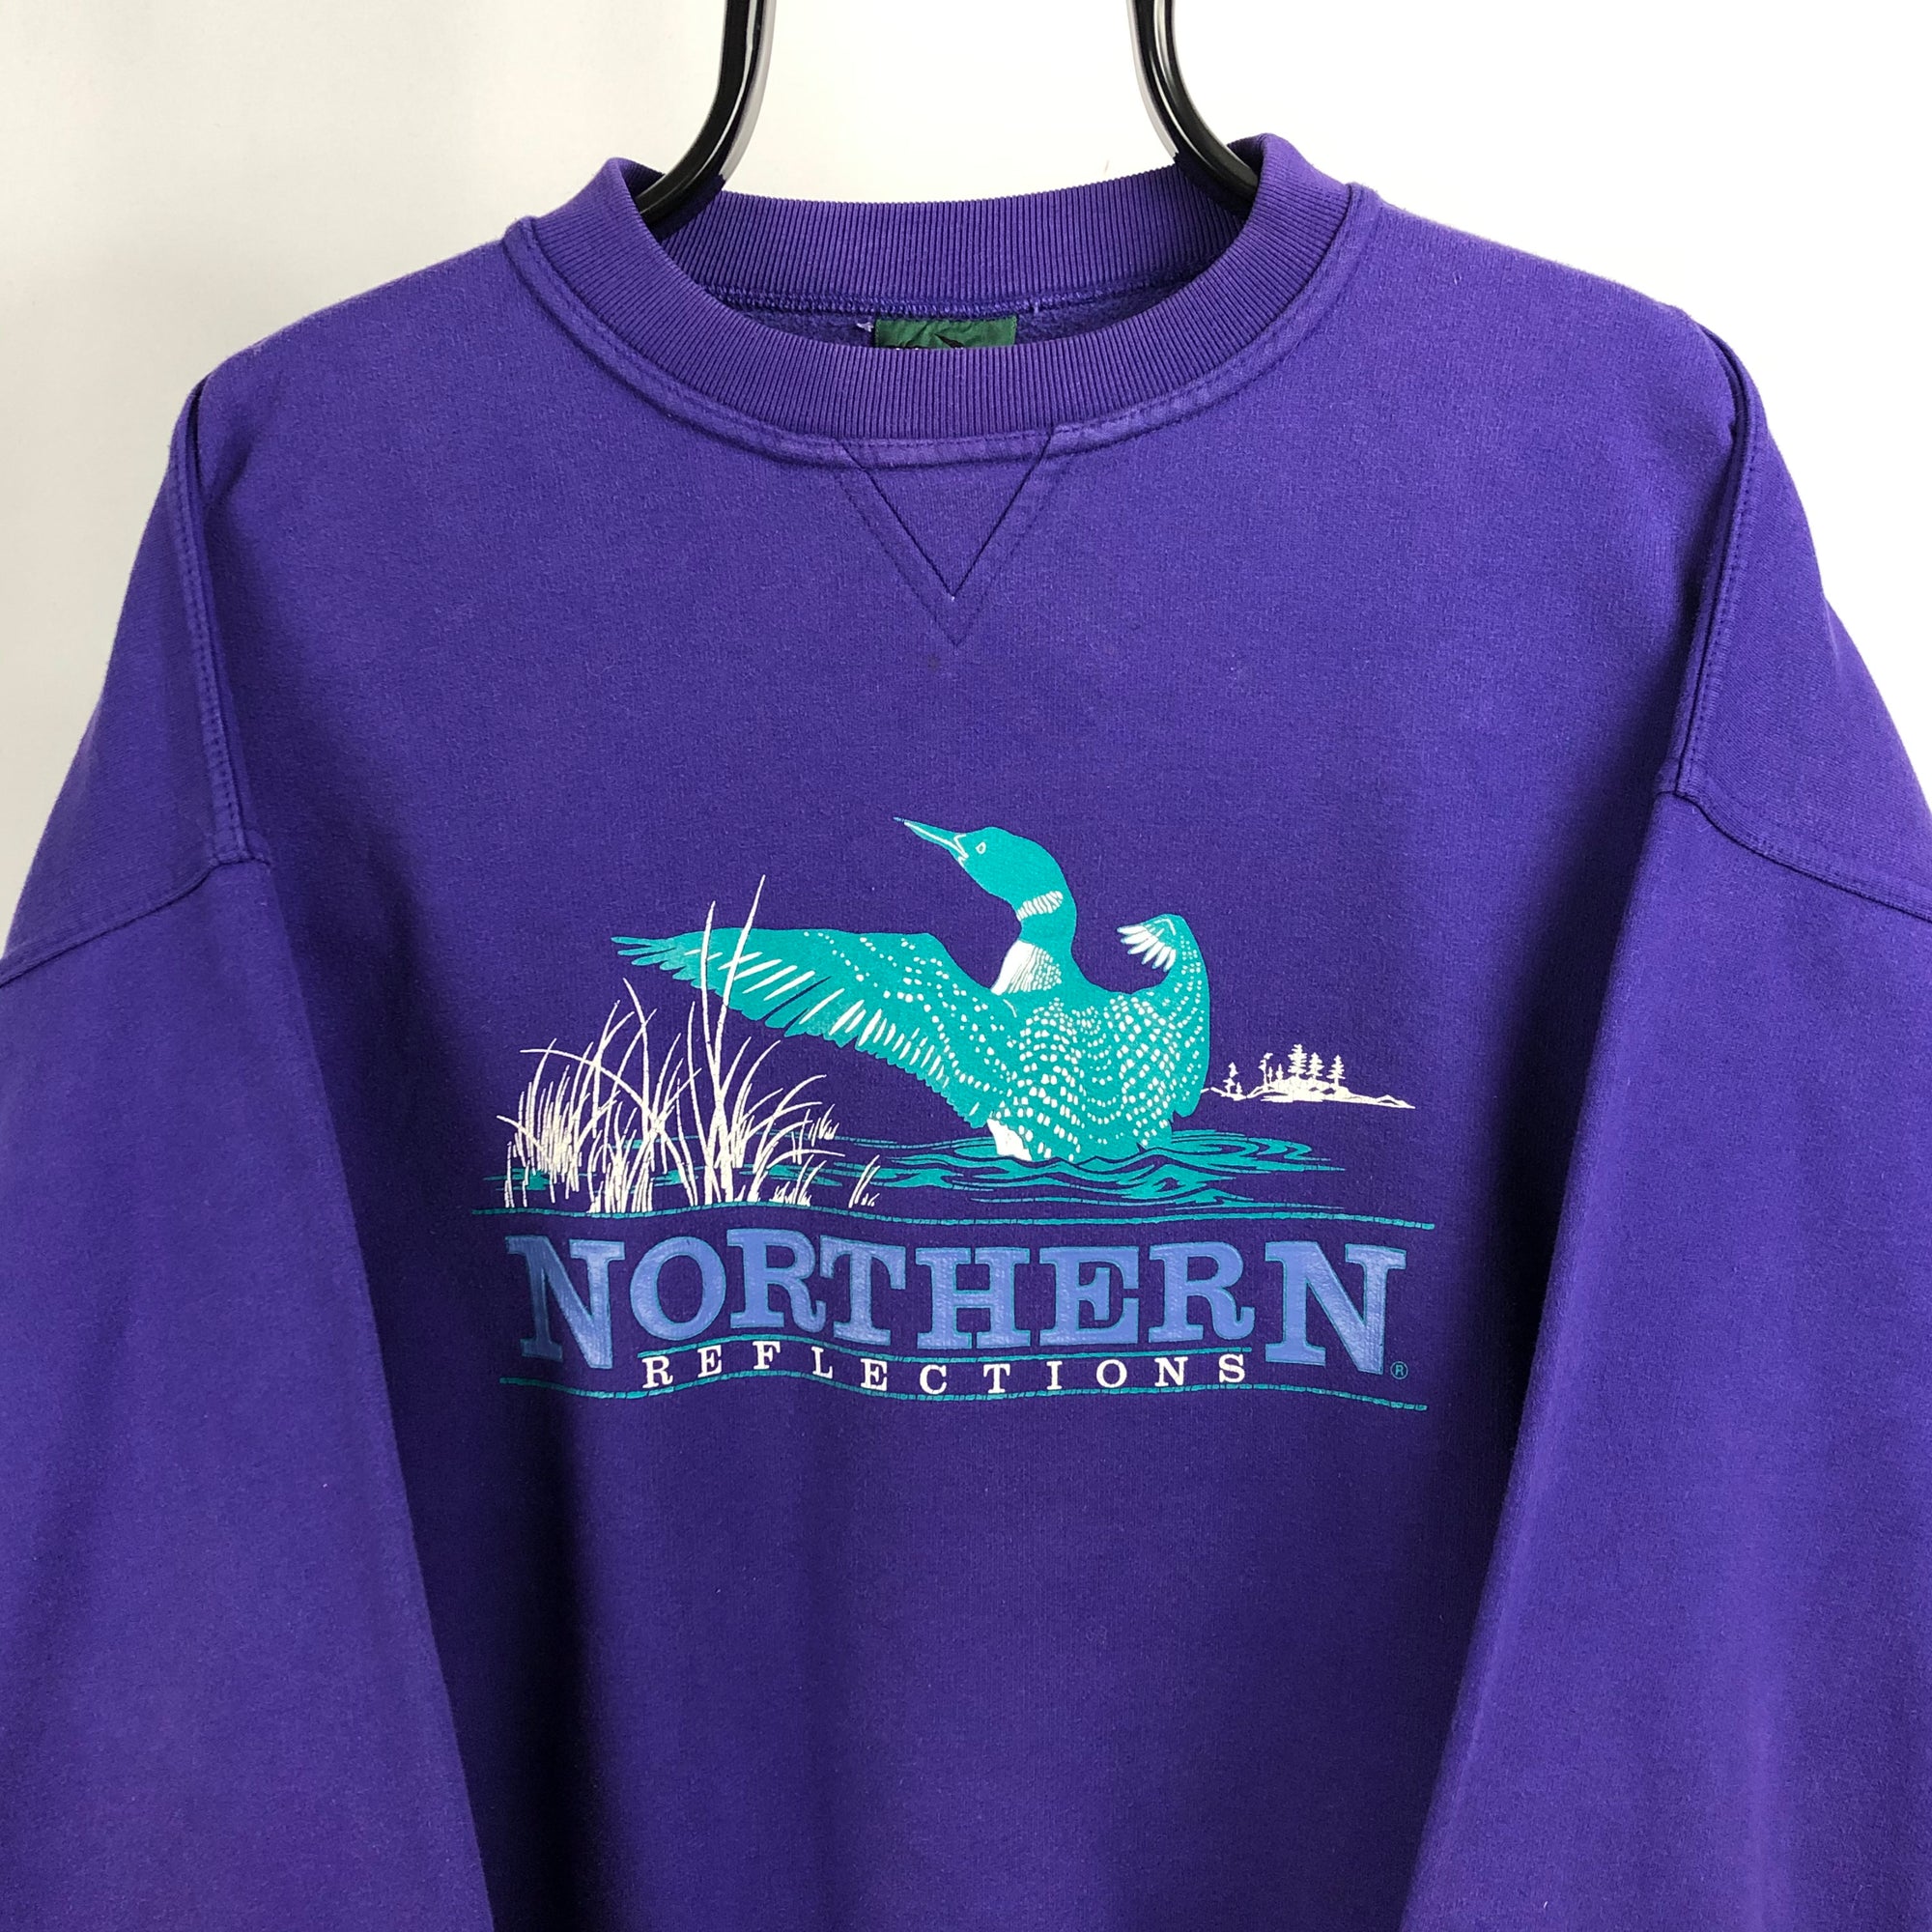 Vintage 'Northern Reflections' Heavyweight Sweatshirt in Purple/Turquoise - Men's Large/Women's XL